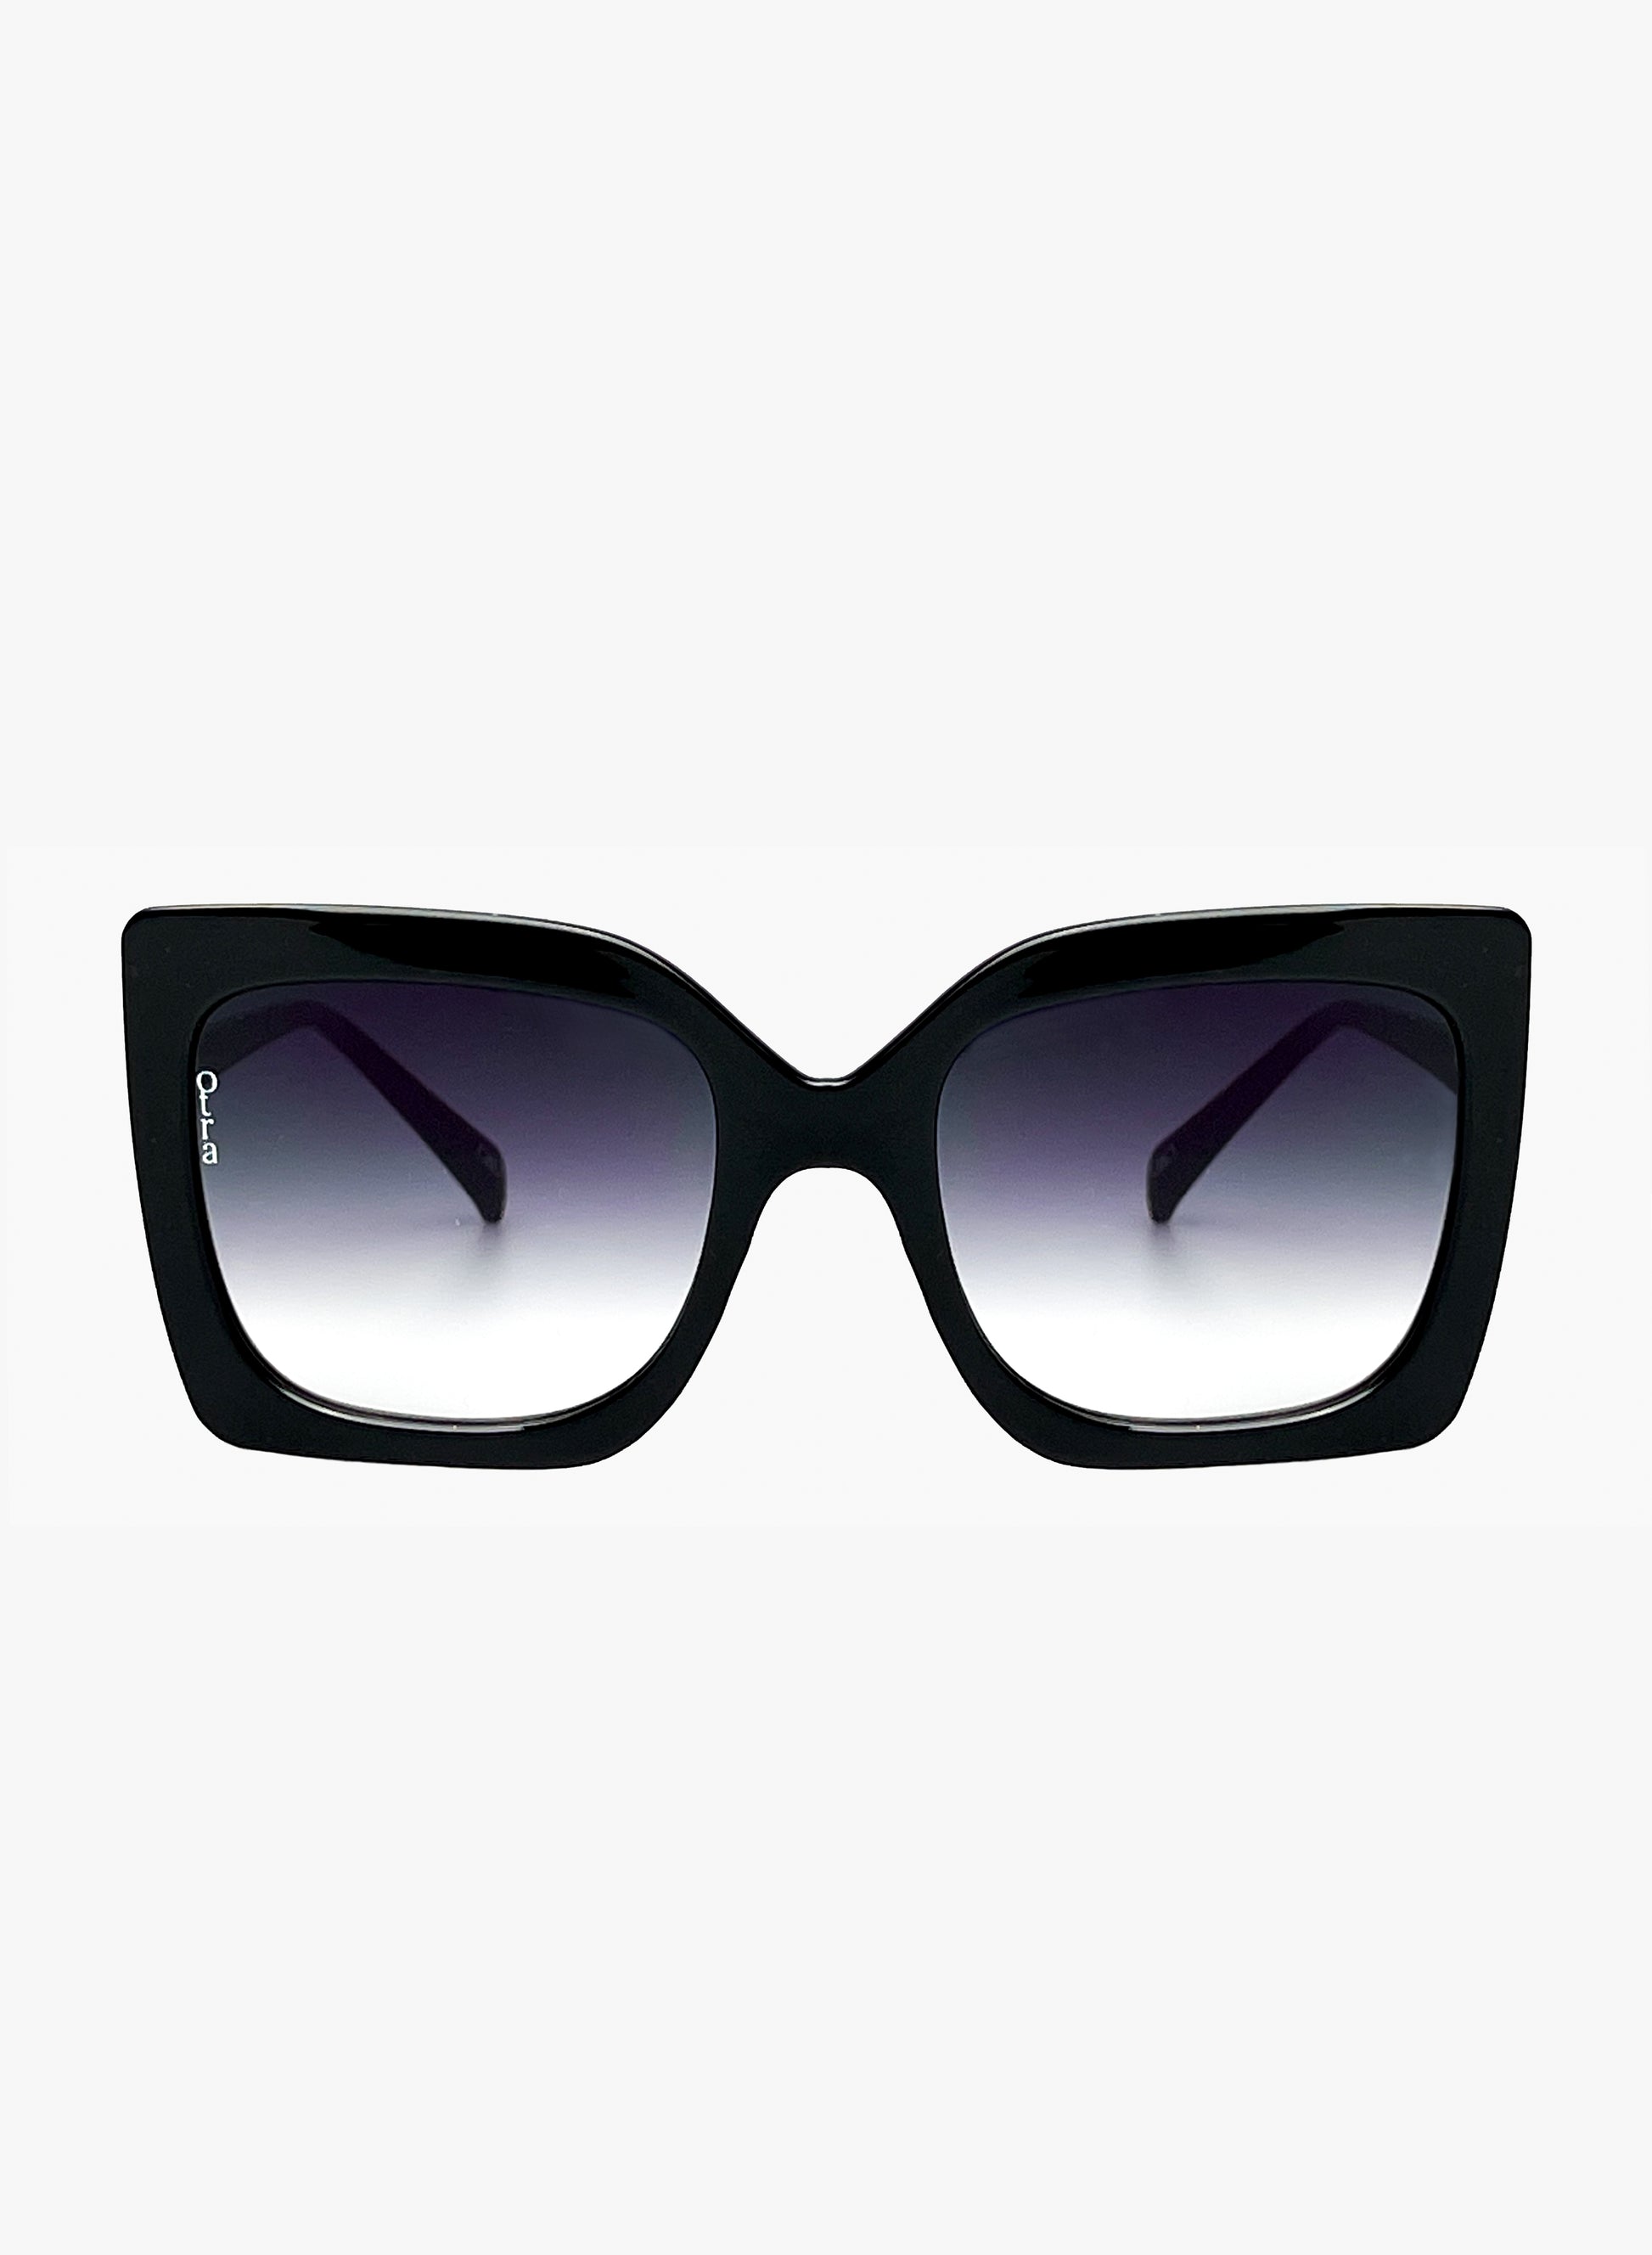 Dynasty oversized sunglasses in black